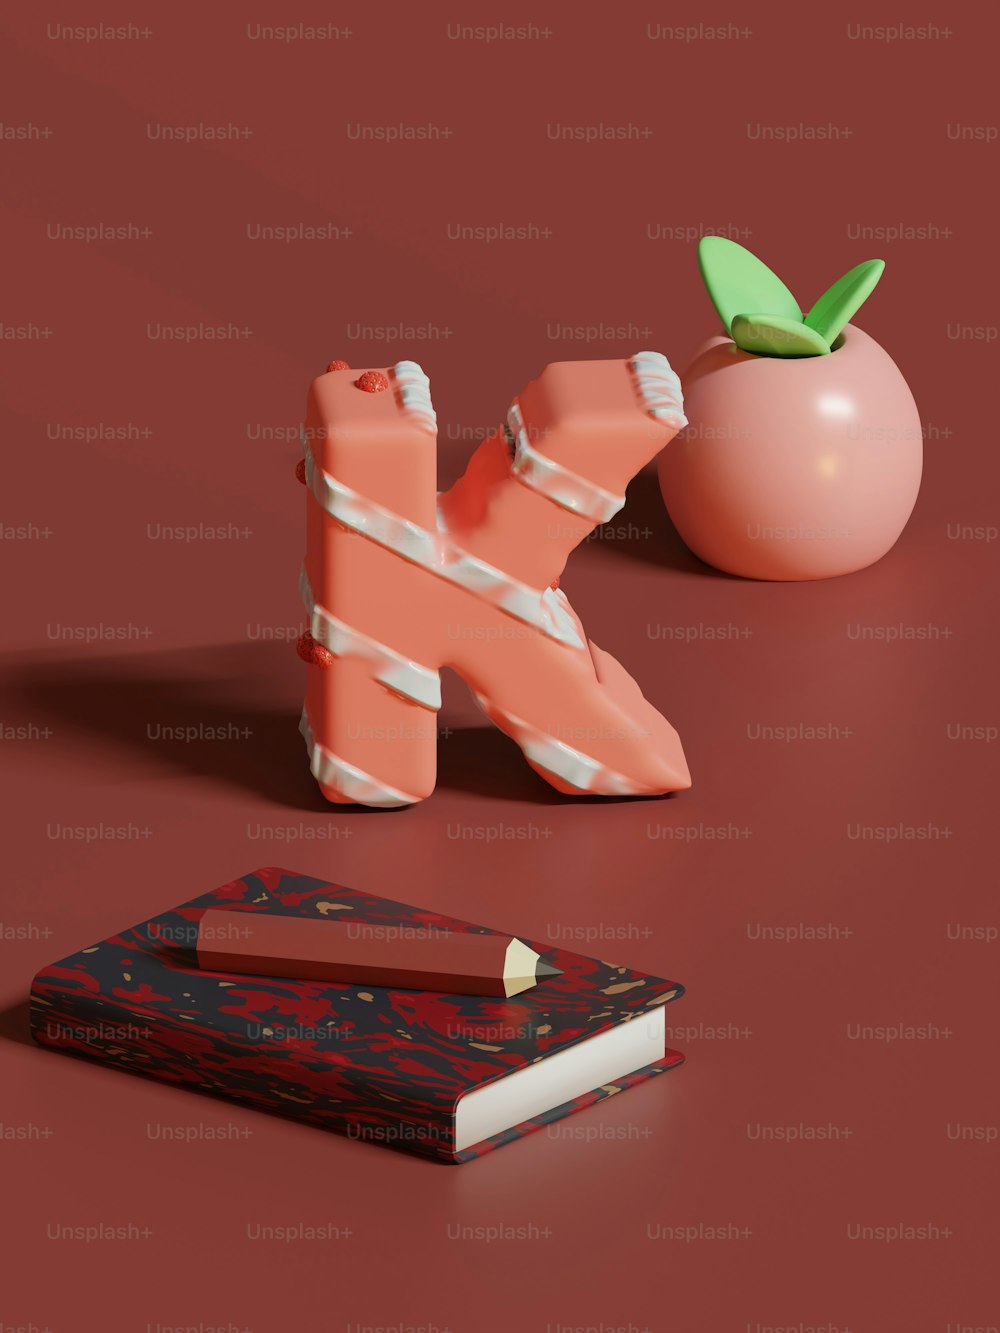 Un libro, un portamatite e una mela siedono su una superficie rossa